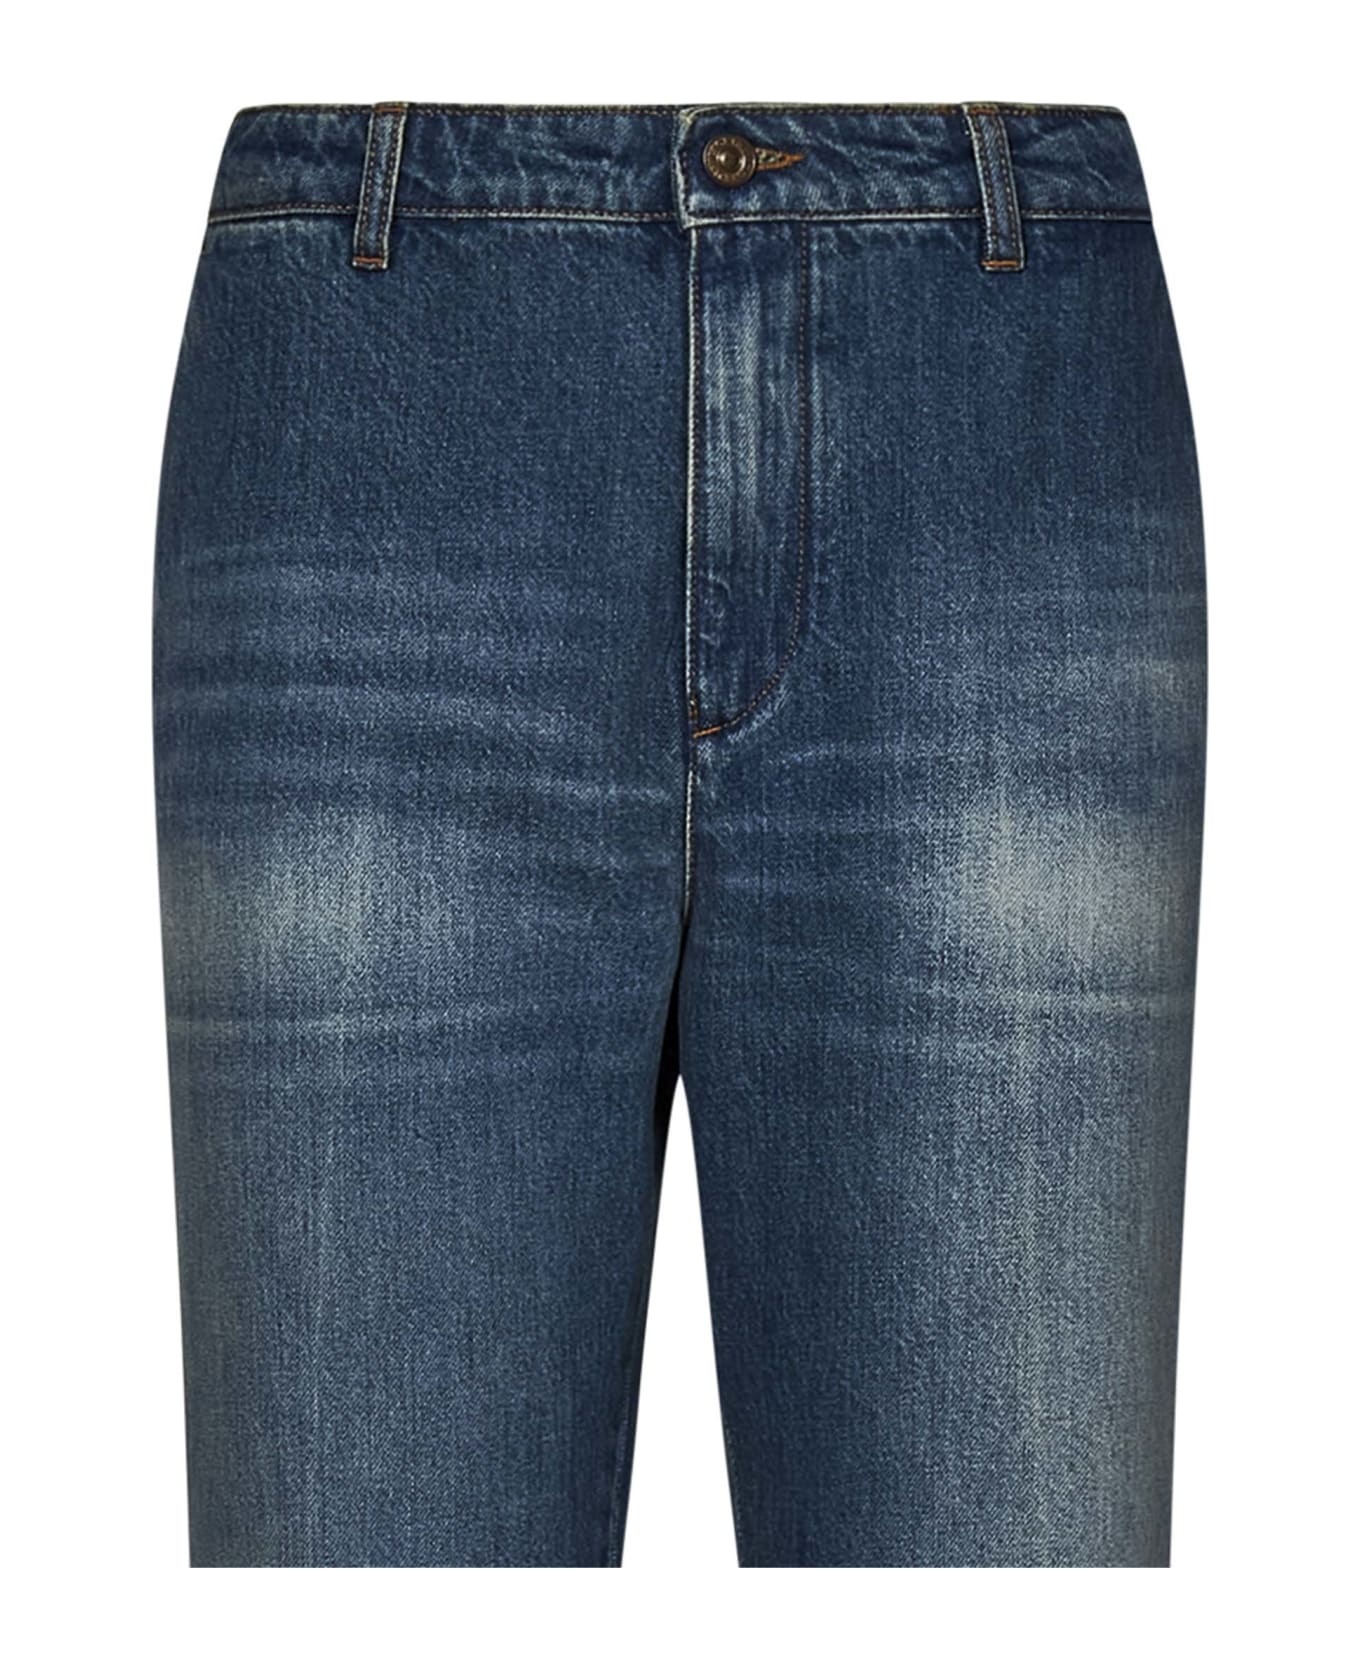 Victoria Beckham Cropped Kick Jeans - Blue